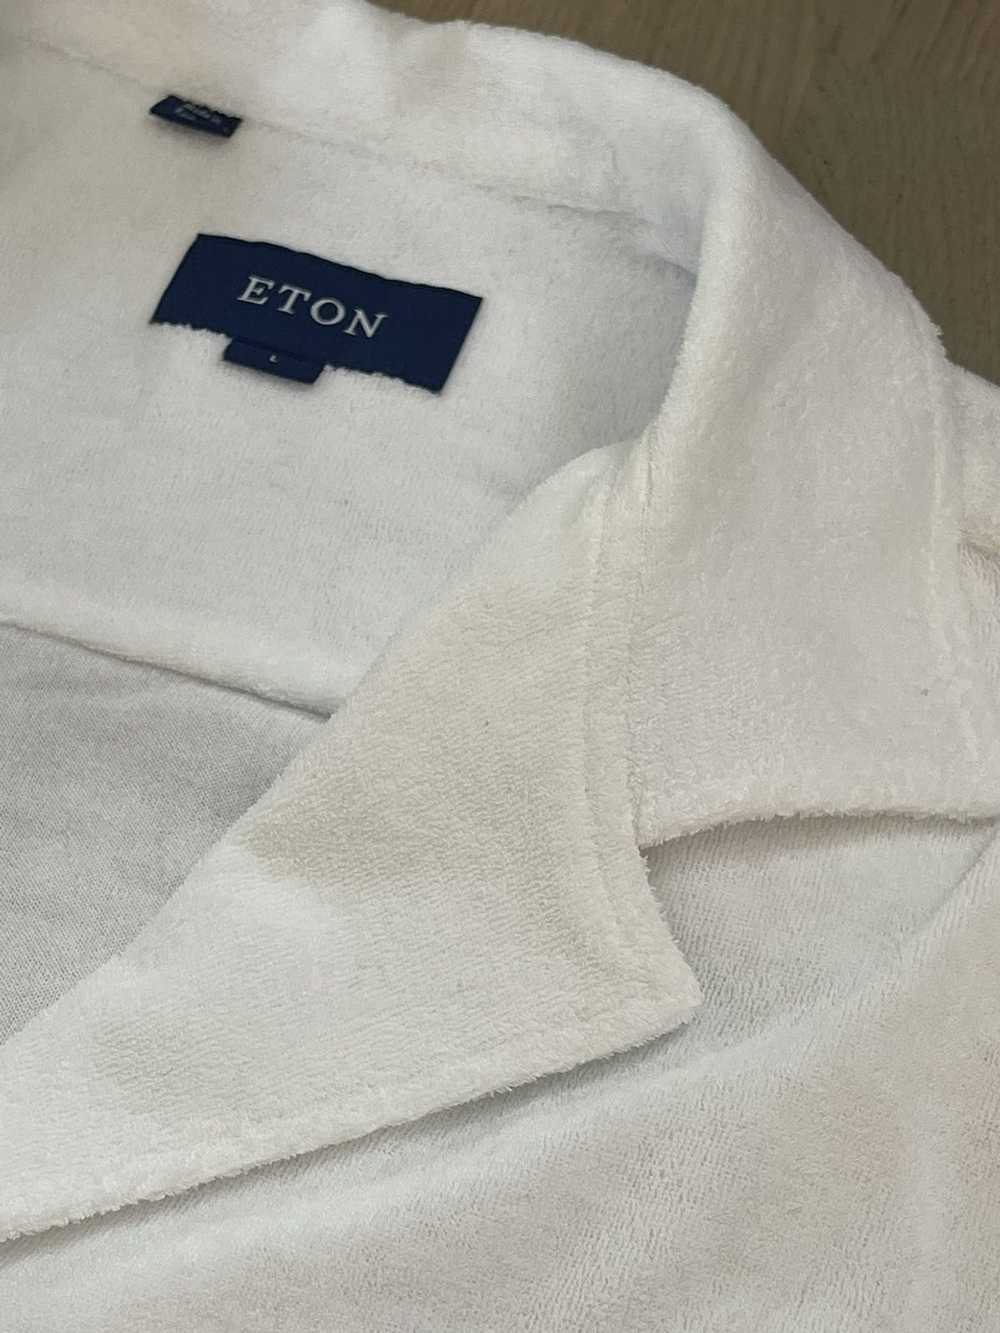 Eton ETON shirt real sizes in photos by tape meas… - image 8